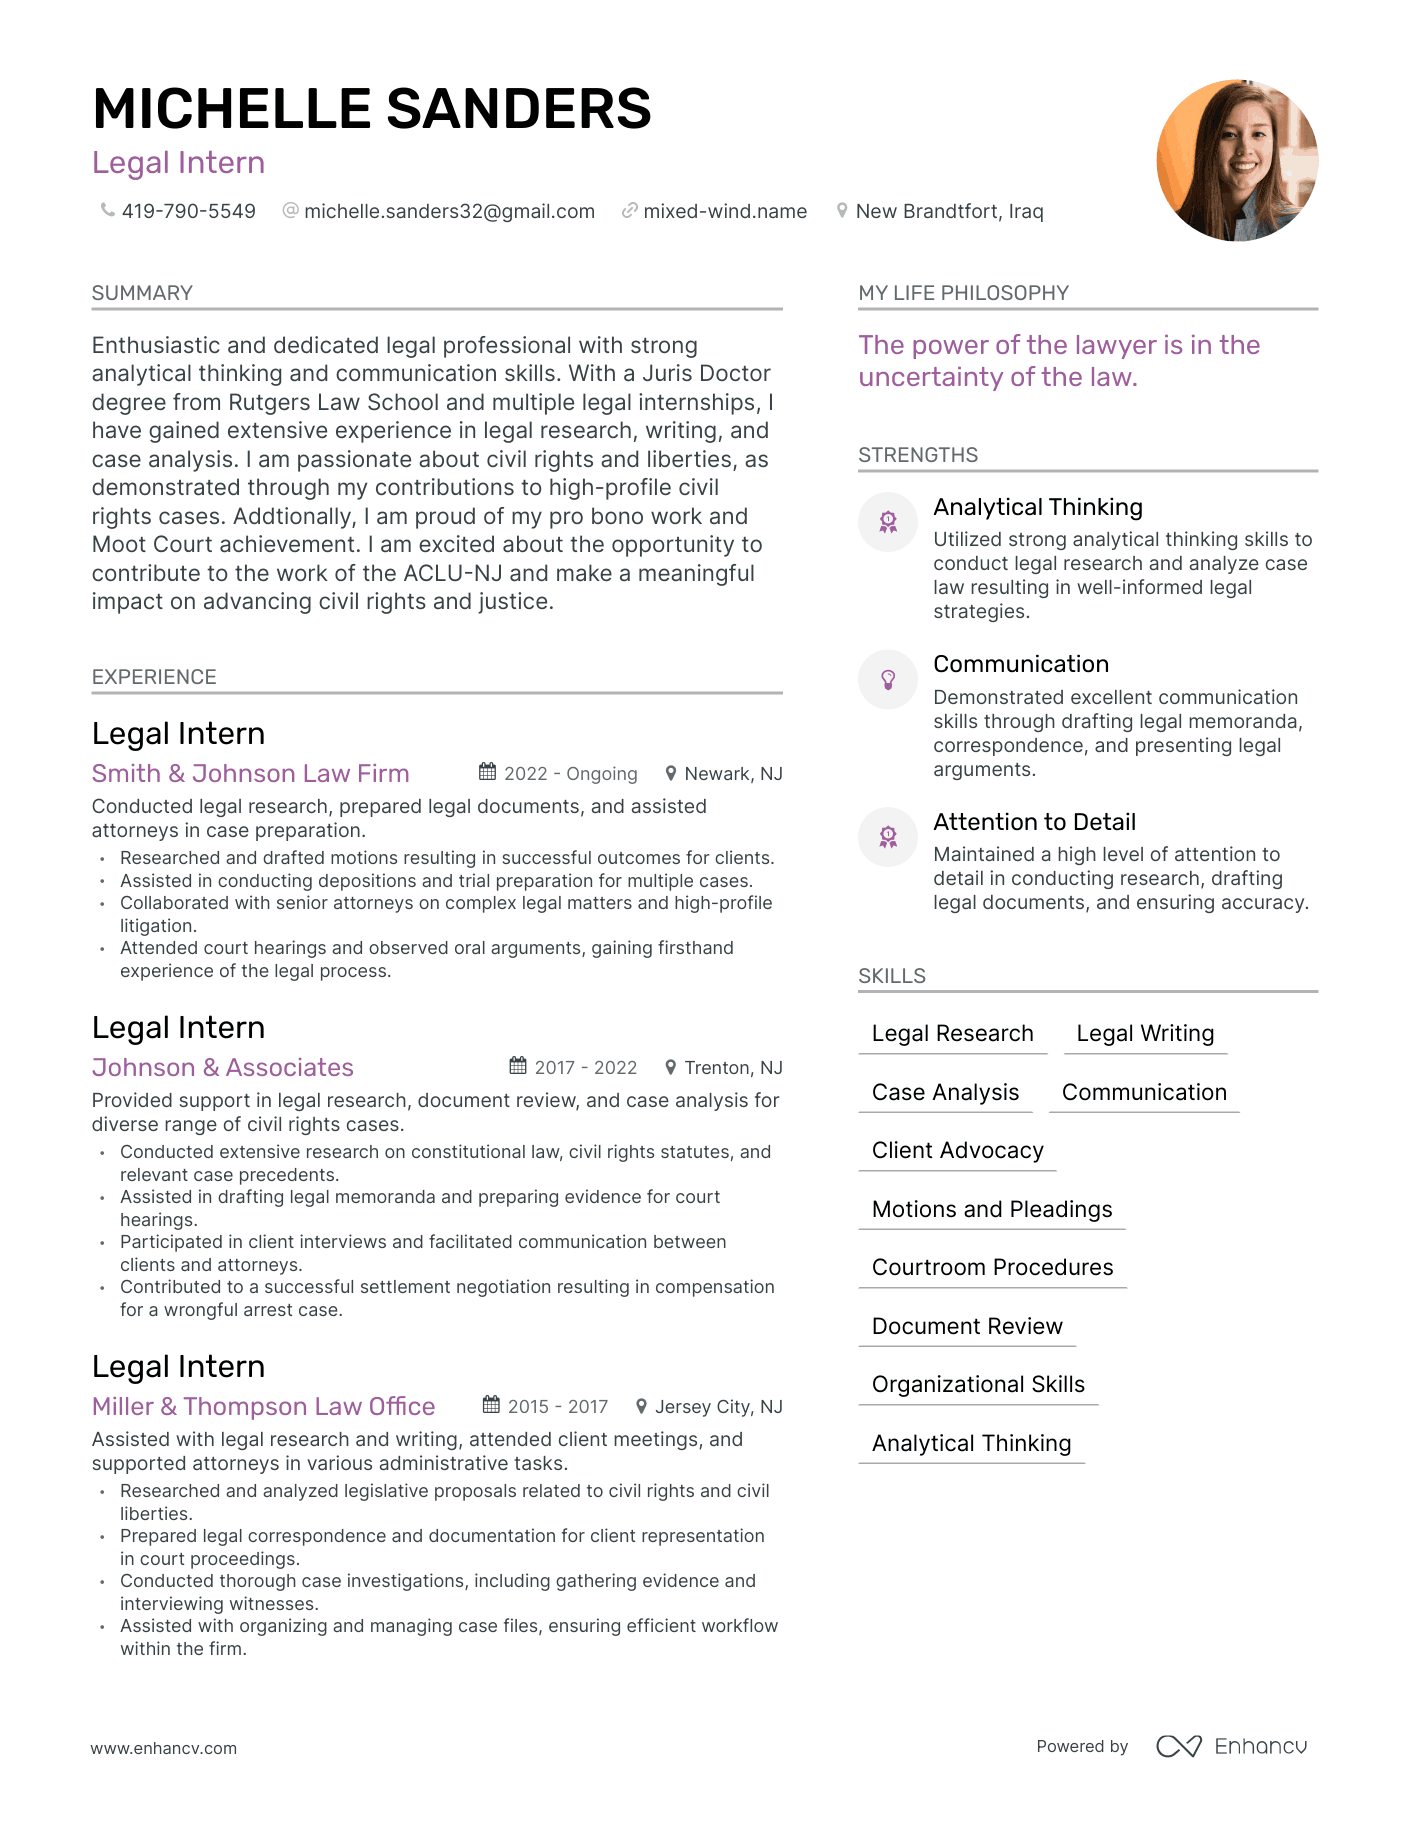 Legal Intern resume example